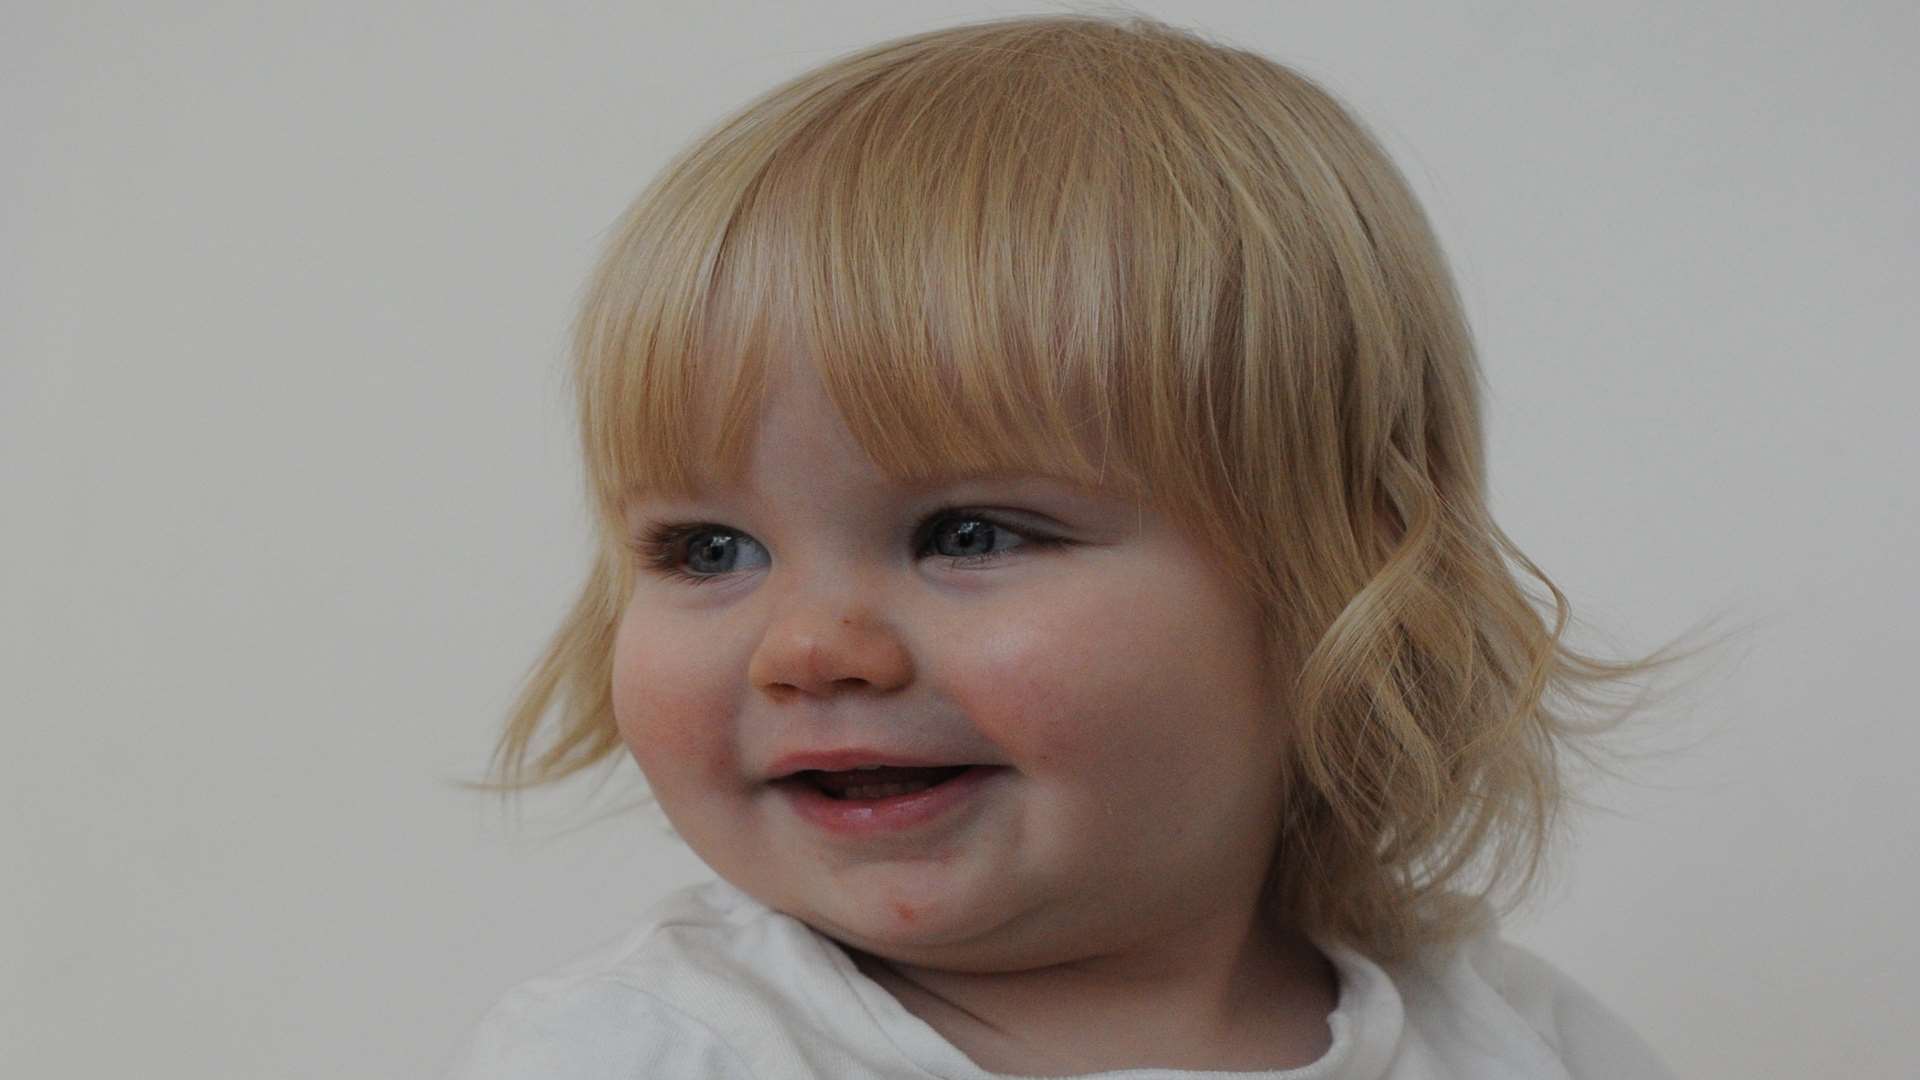 Jessica Primett, 15 months, poses for the camera